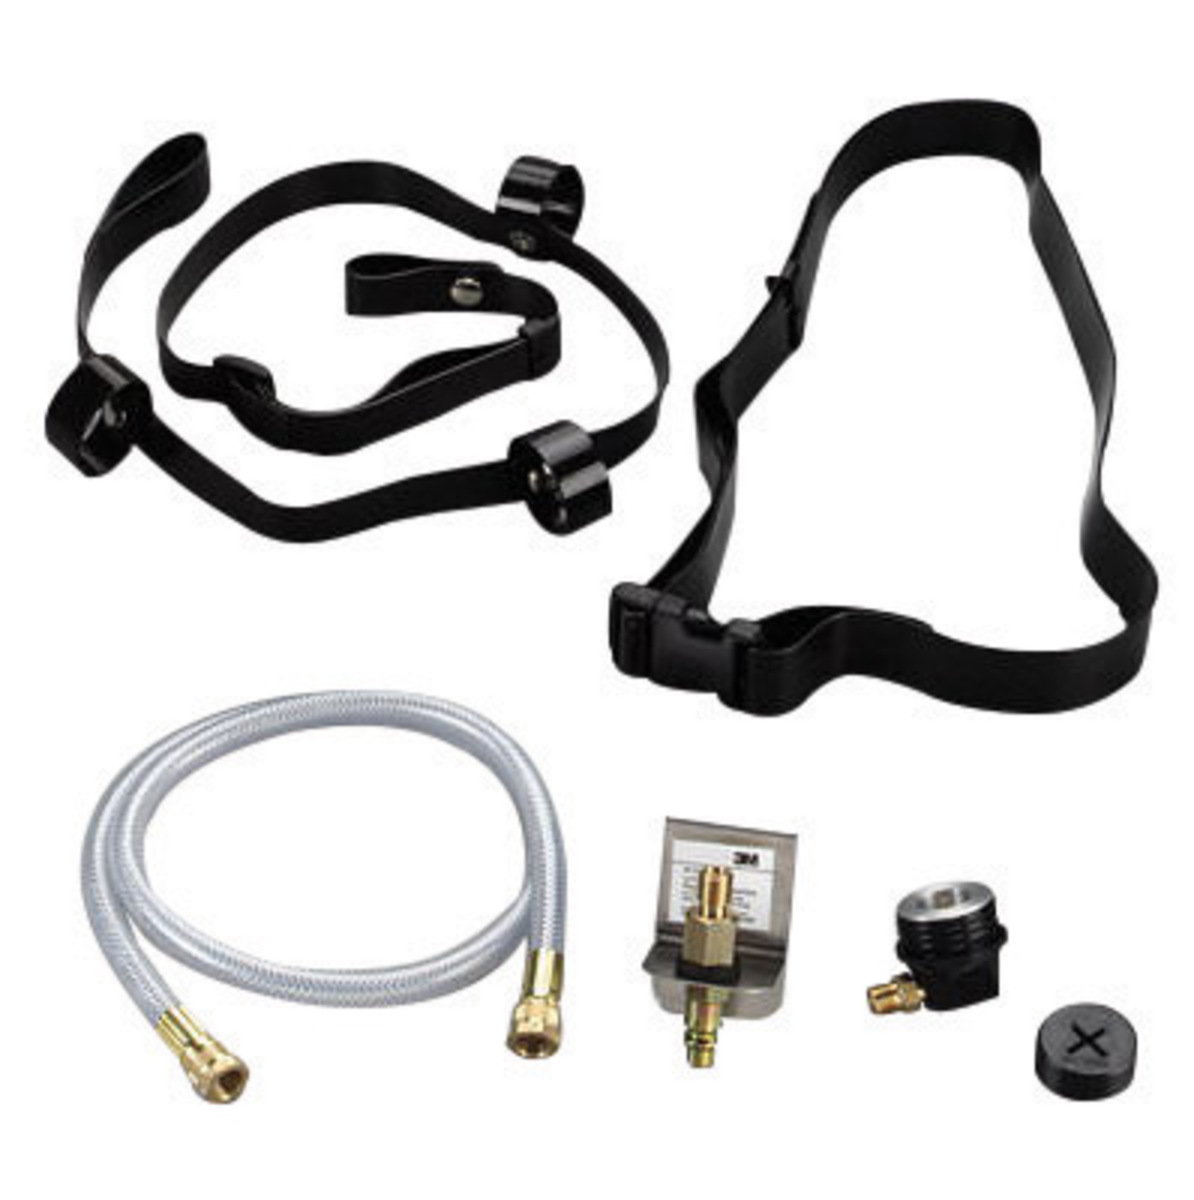 3M™ 7000 Series Low Pressure Air Regulating Kit (Includes Airline Adapter, Breathing Tube, Low Pressure Connector, Waist Belt, S